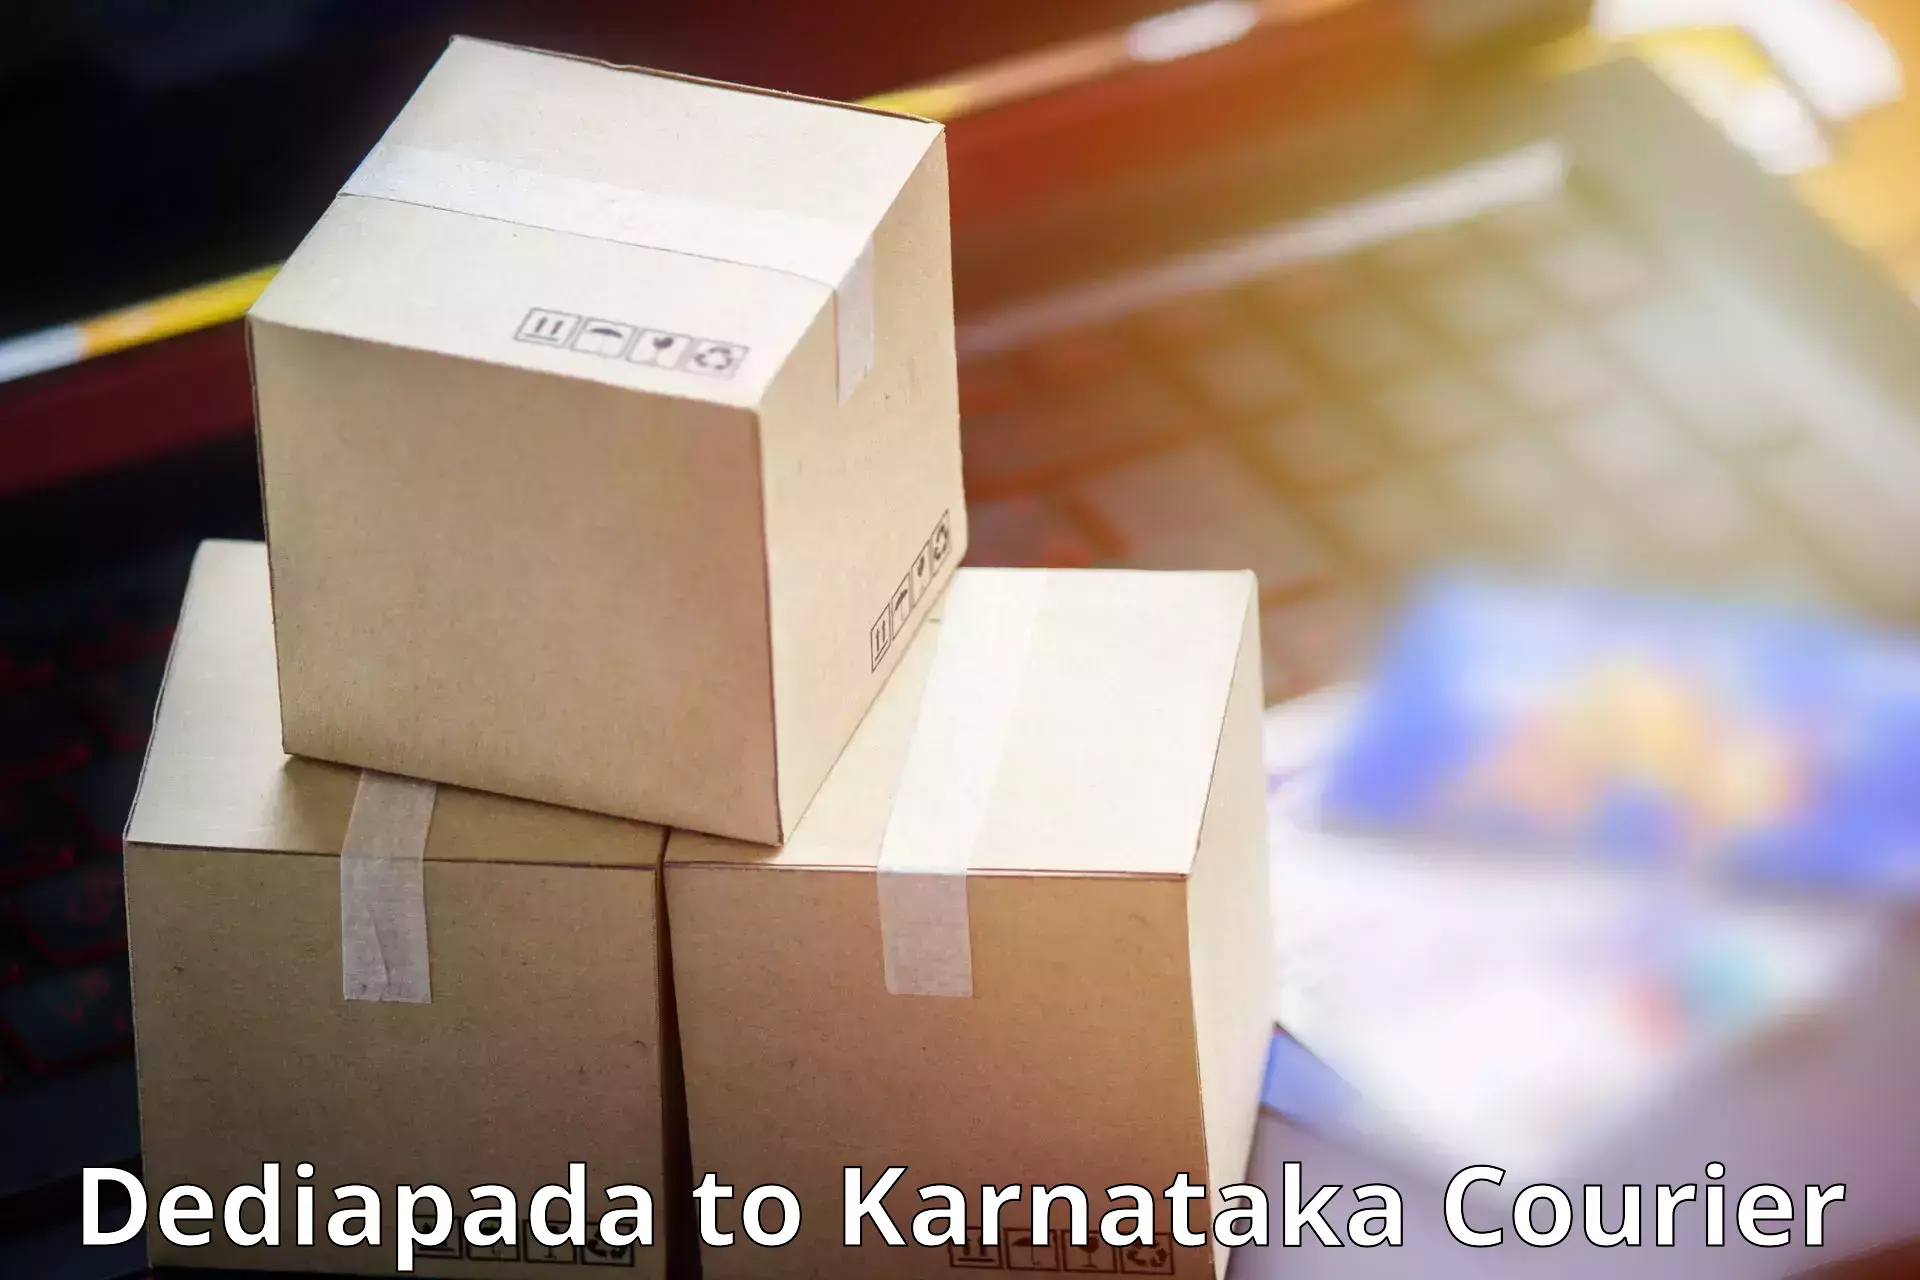 Local delivery service Dediapada to Yenepoya Mangalore